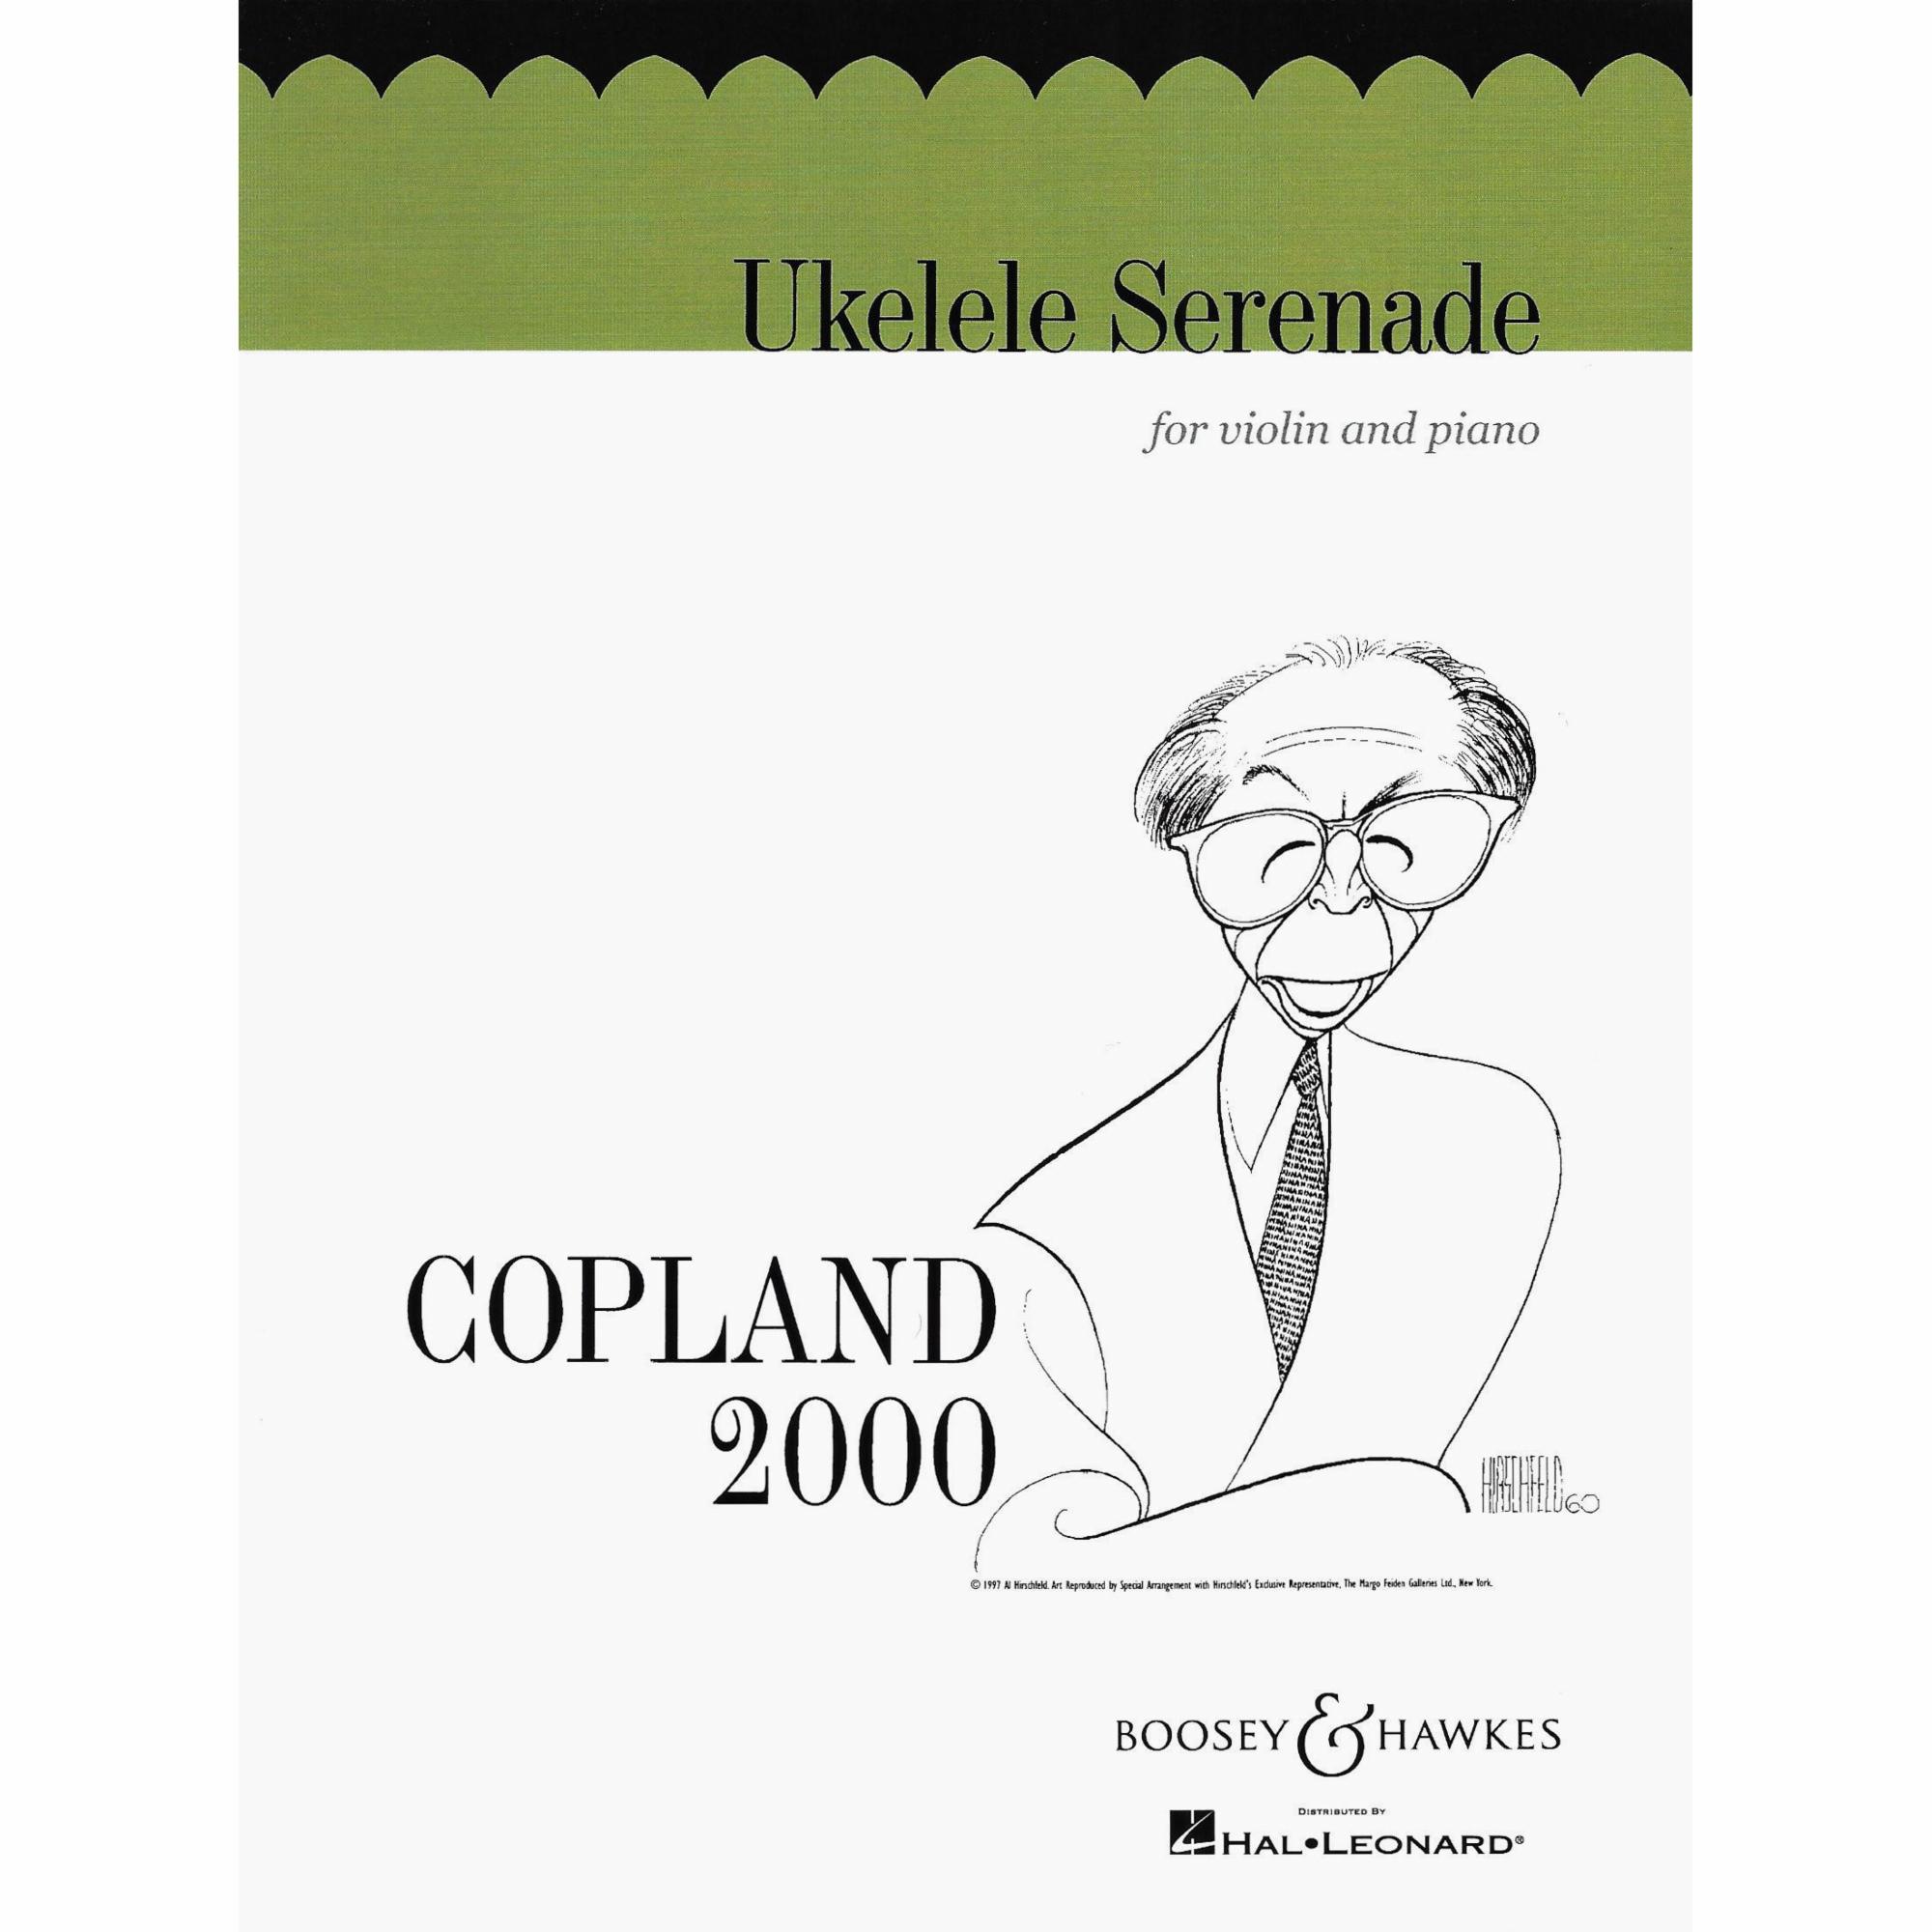 Copland -- Ukelele Serenade for Violin and Piano